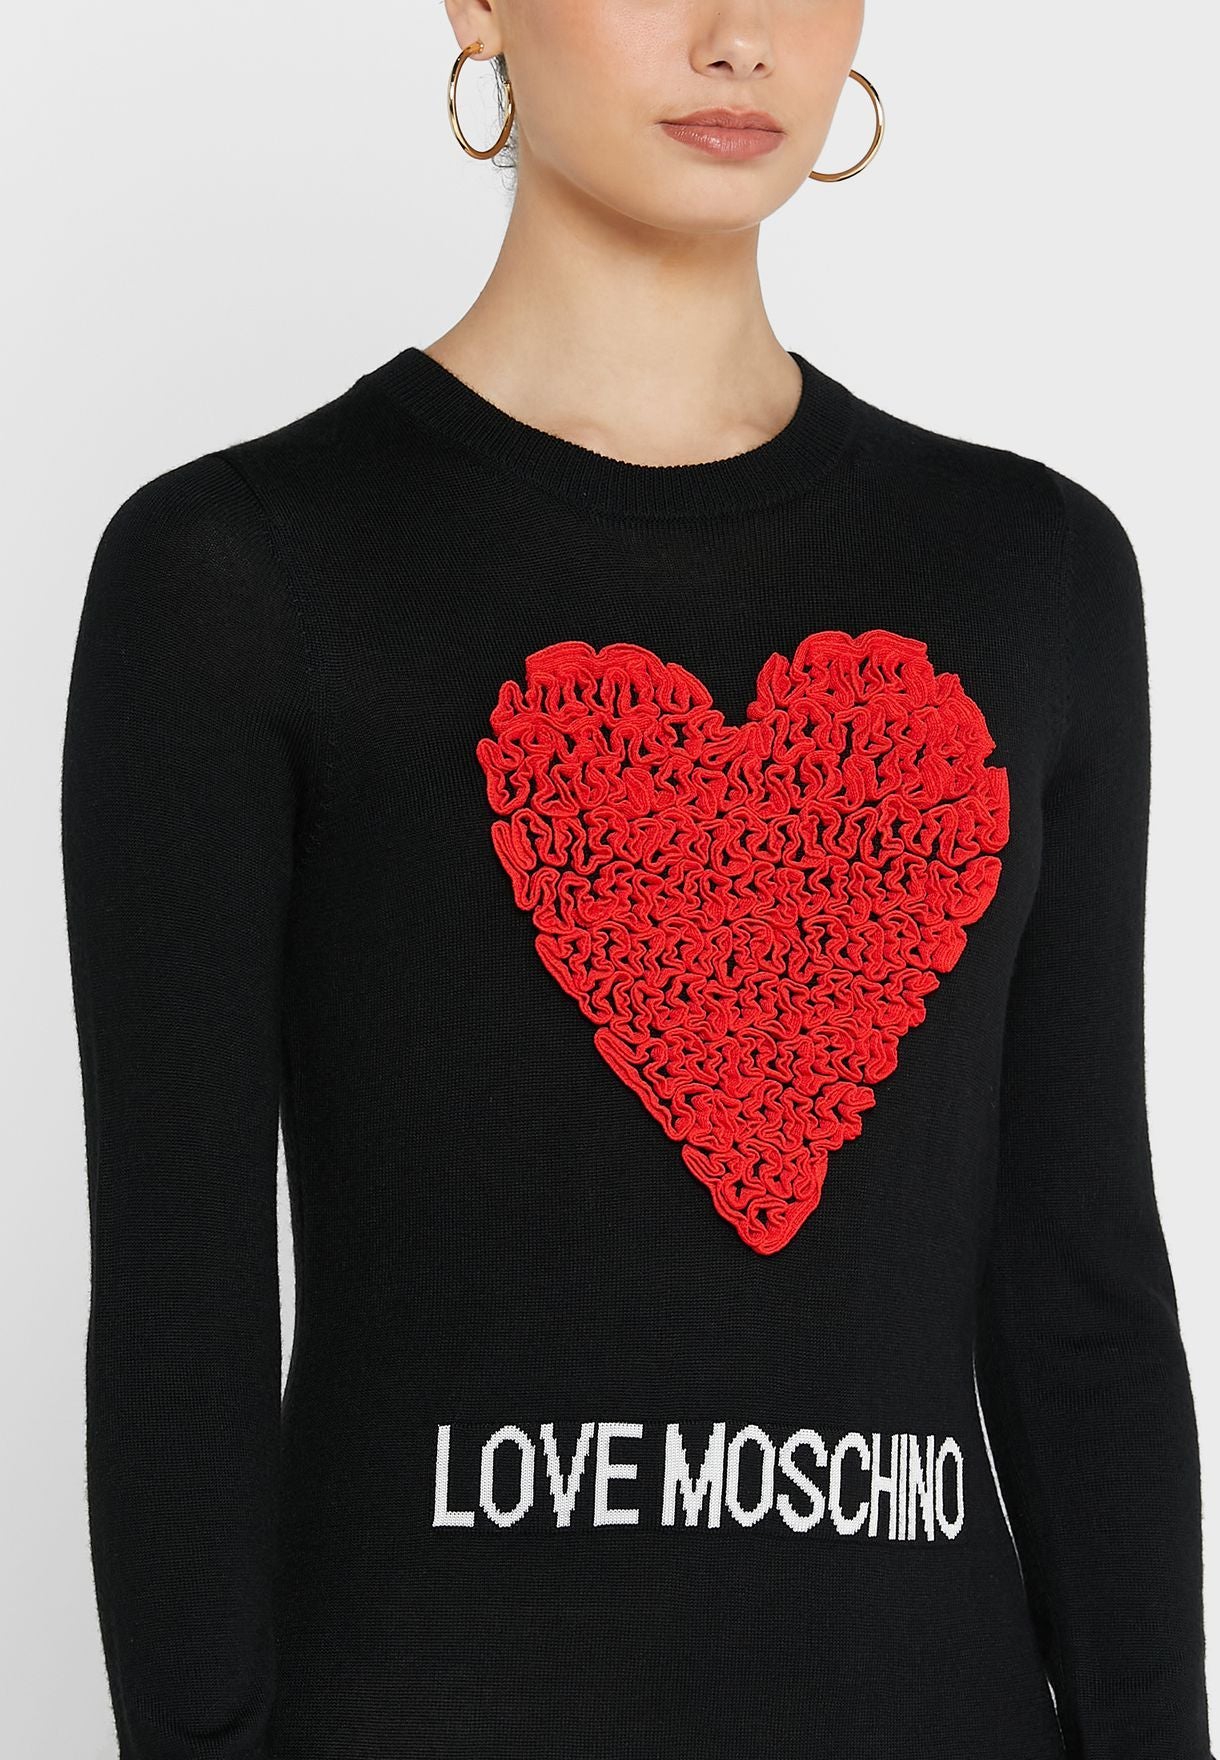 Love Moschino Black Acrylic Dress